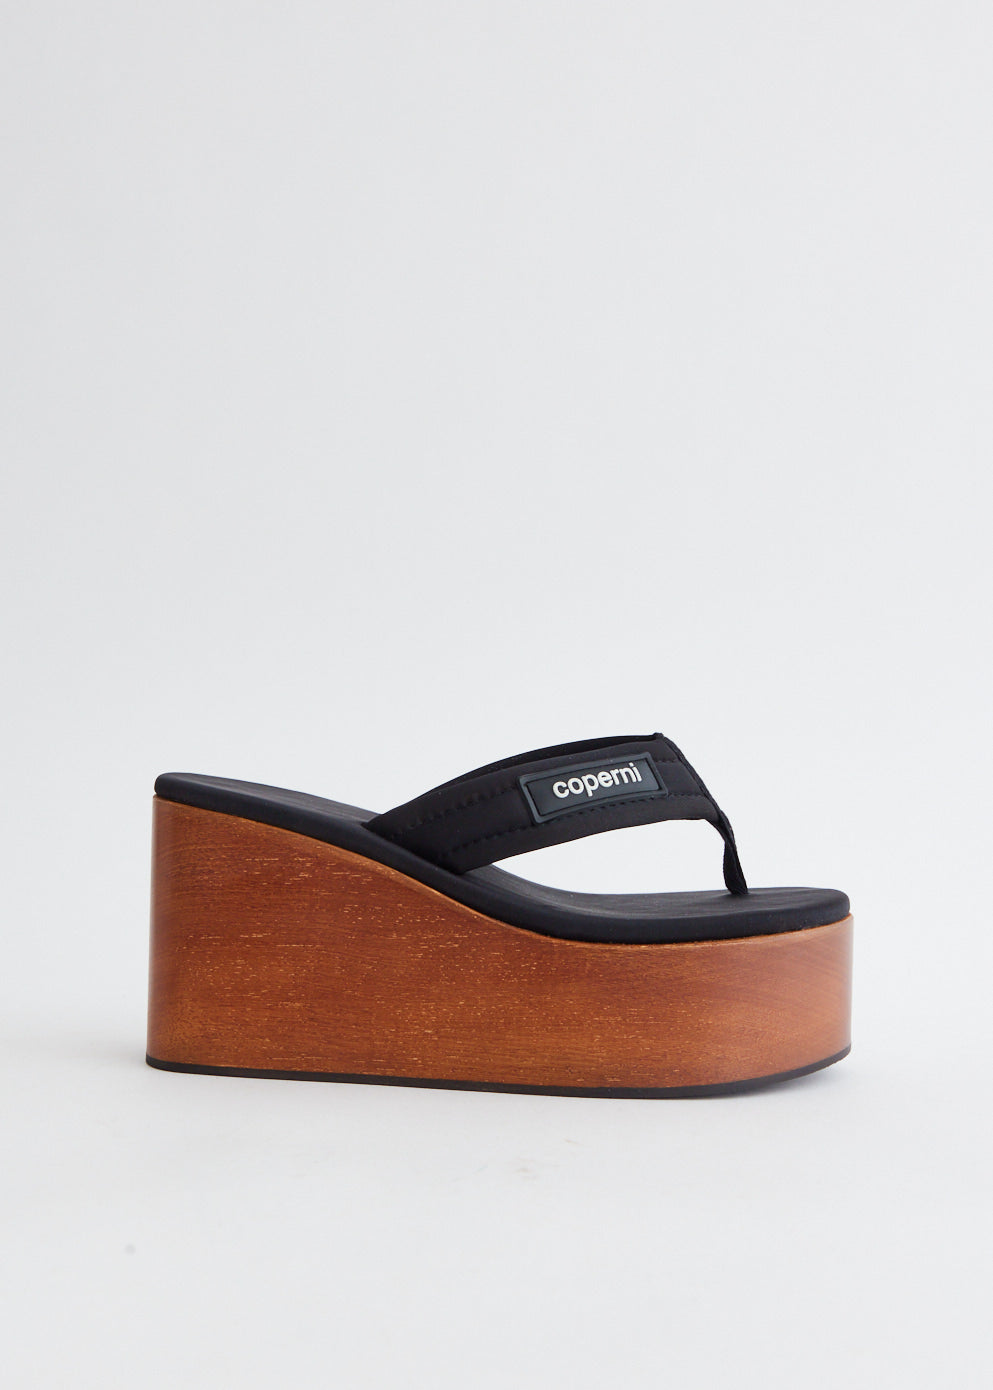 Wooden Branded Wedge Sandals